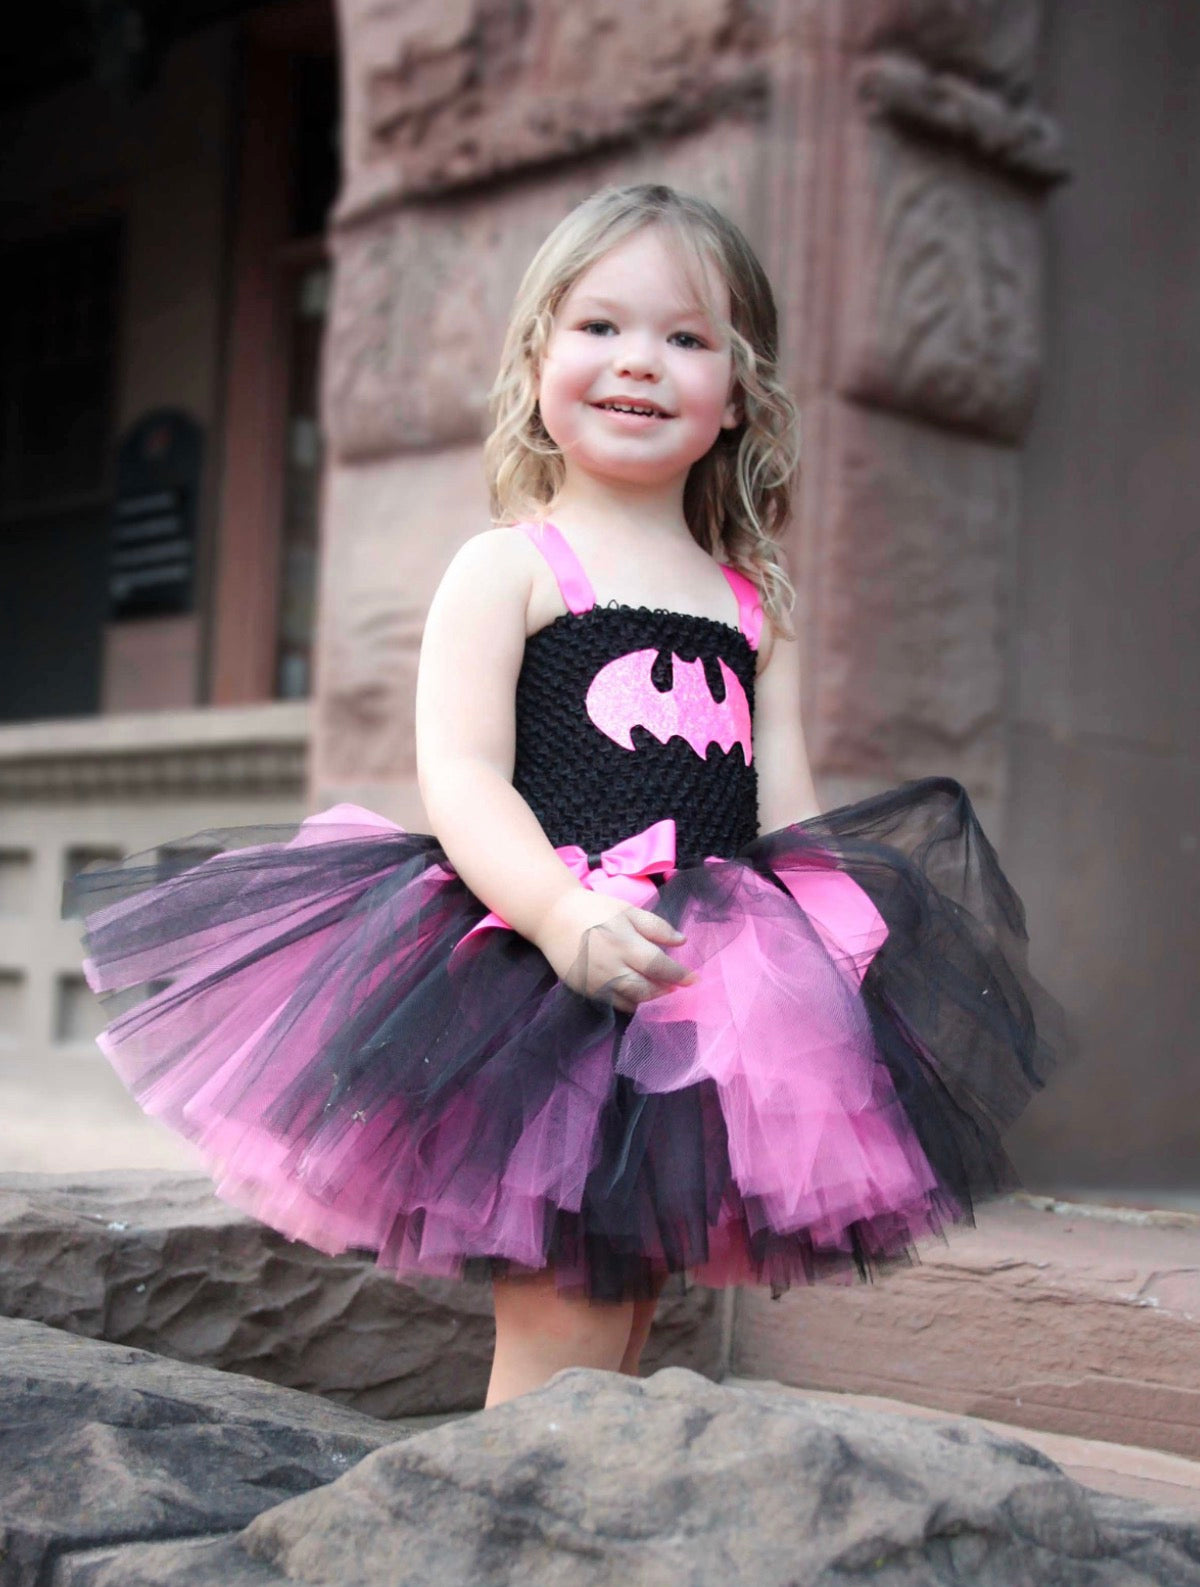 batman costume for baby